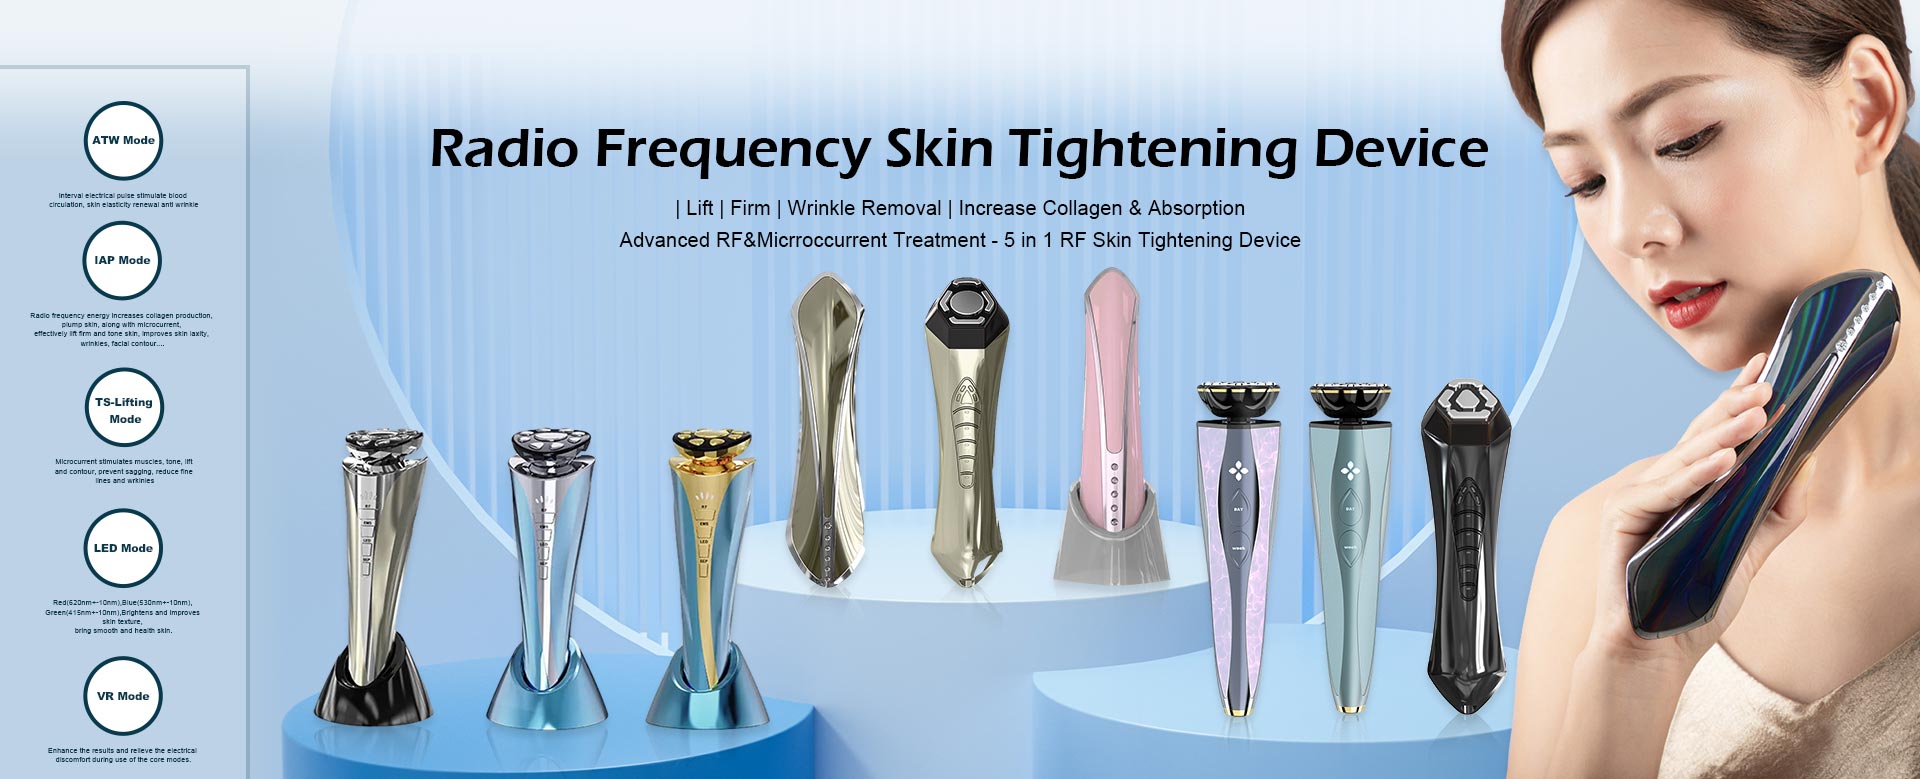 radio frequency skin tighten device